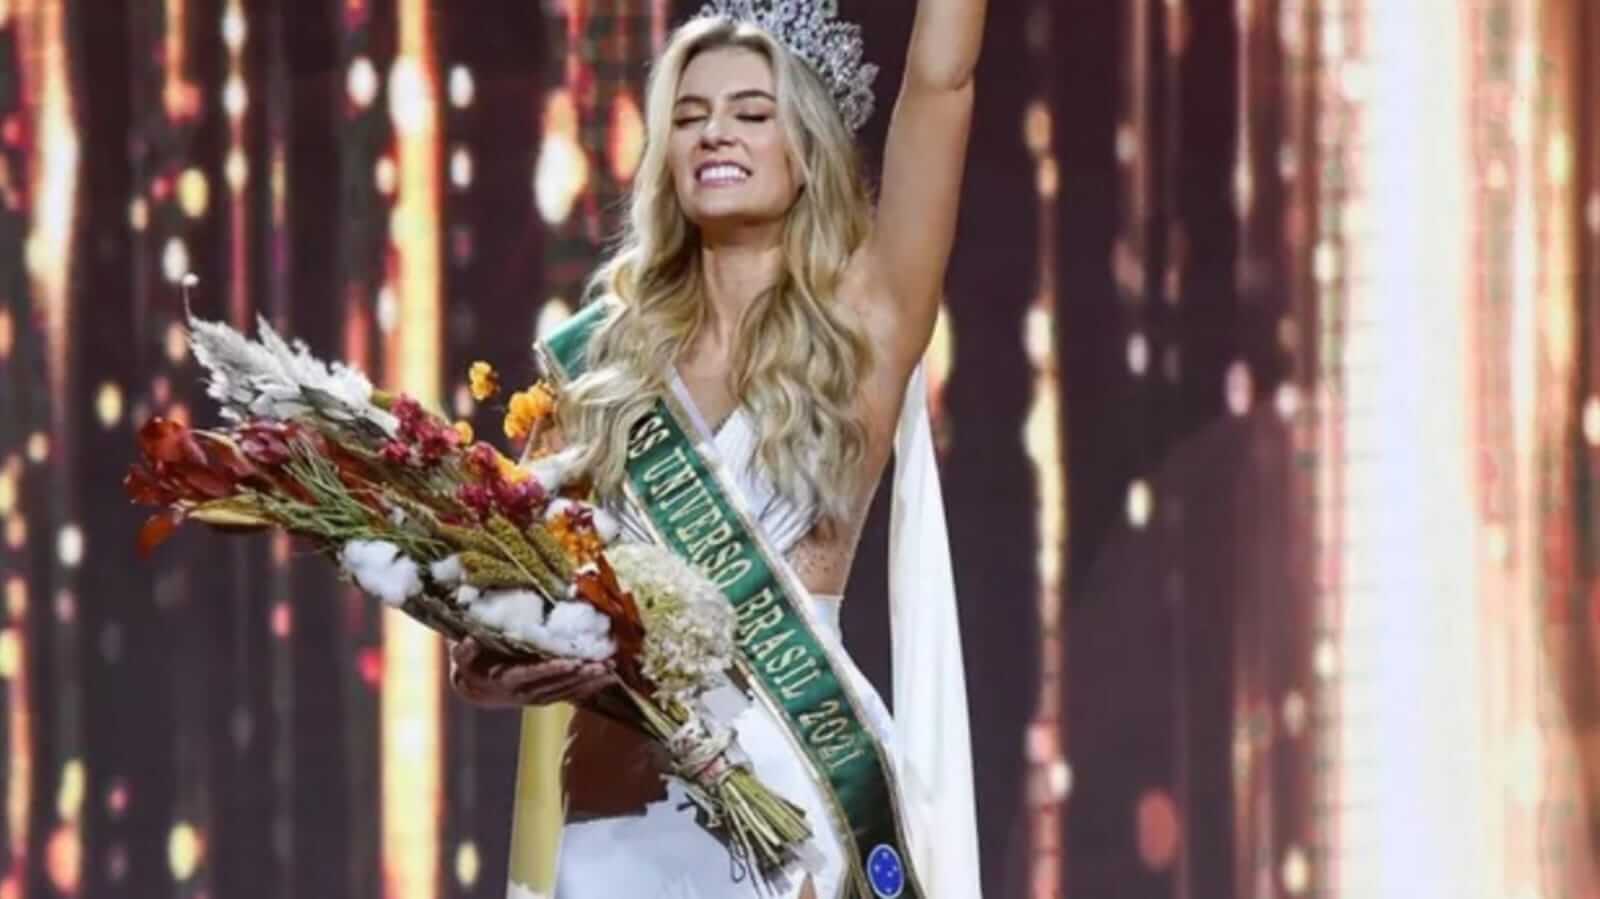 Teresa Santos, Miss Brasil 2021